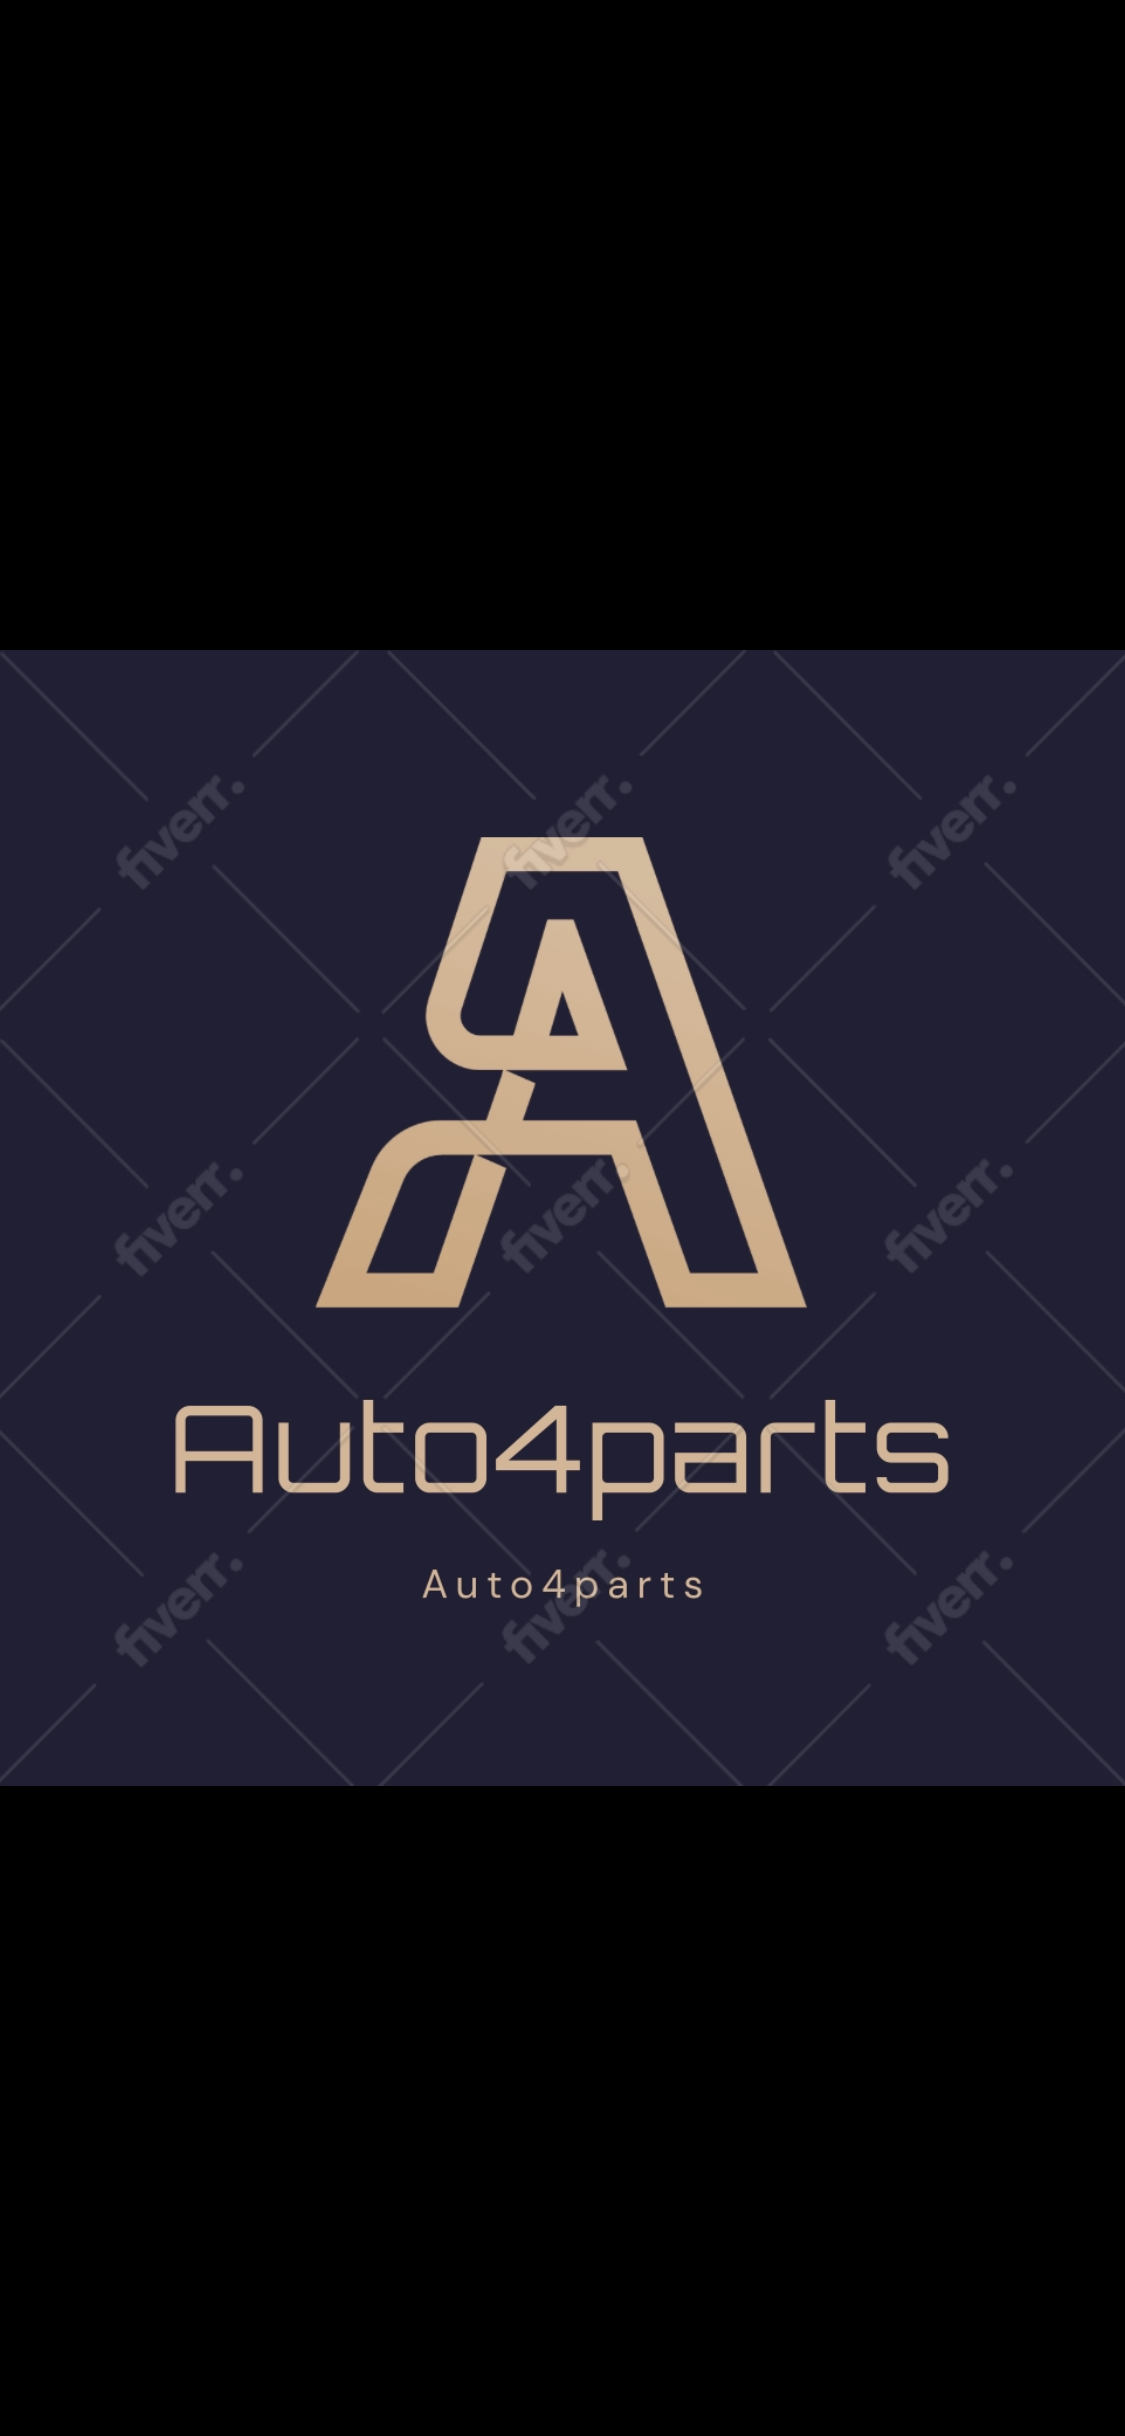 Auto4parts